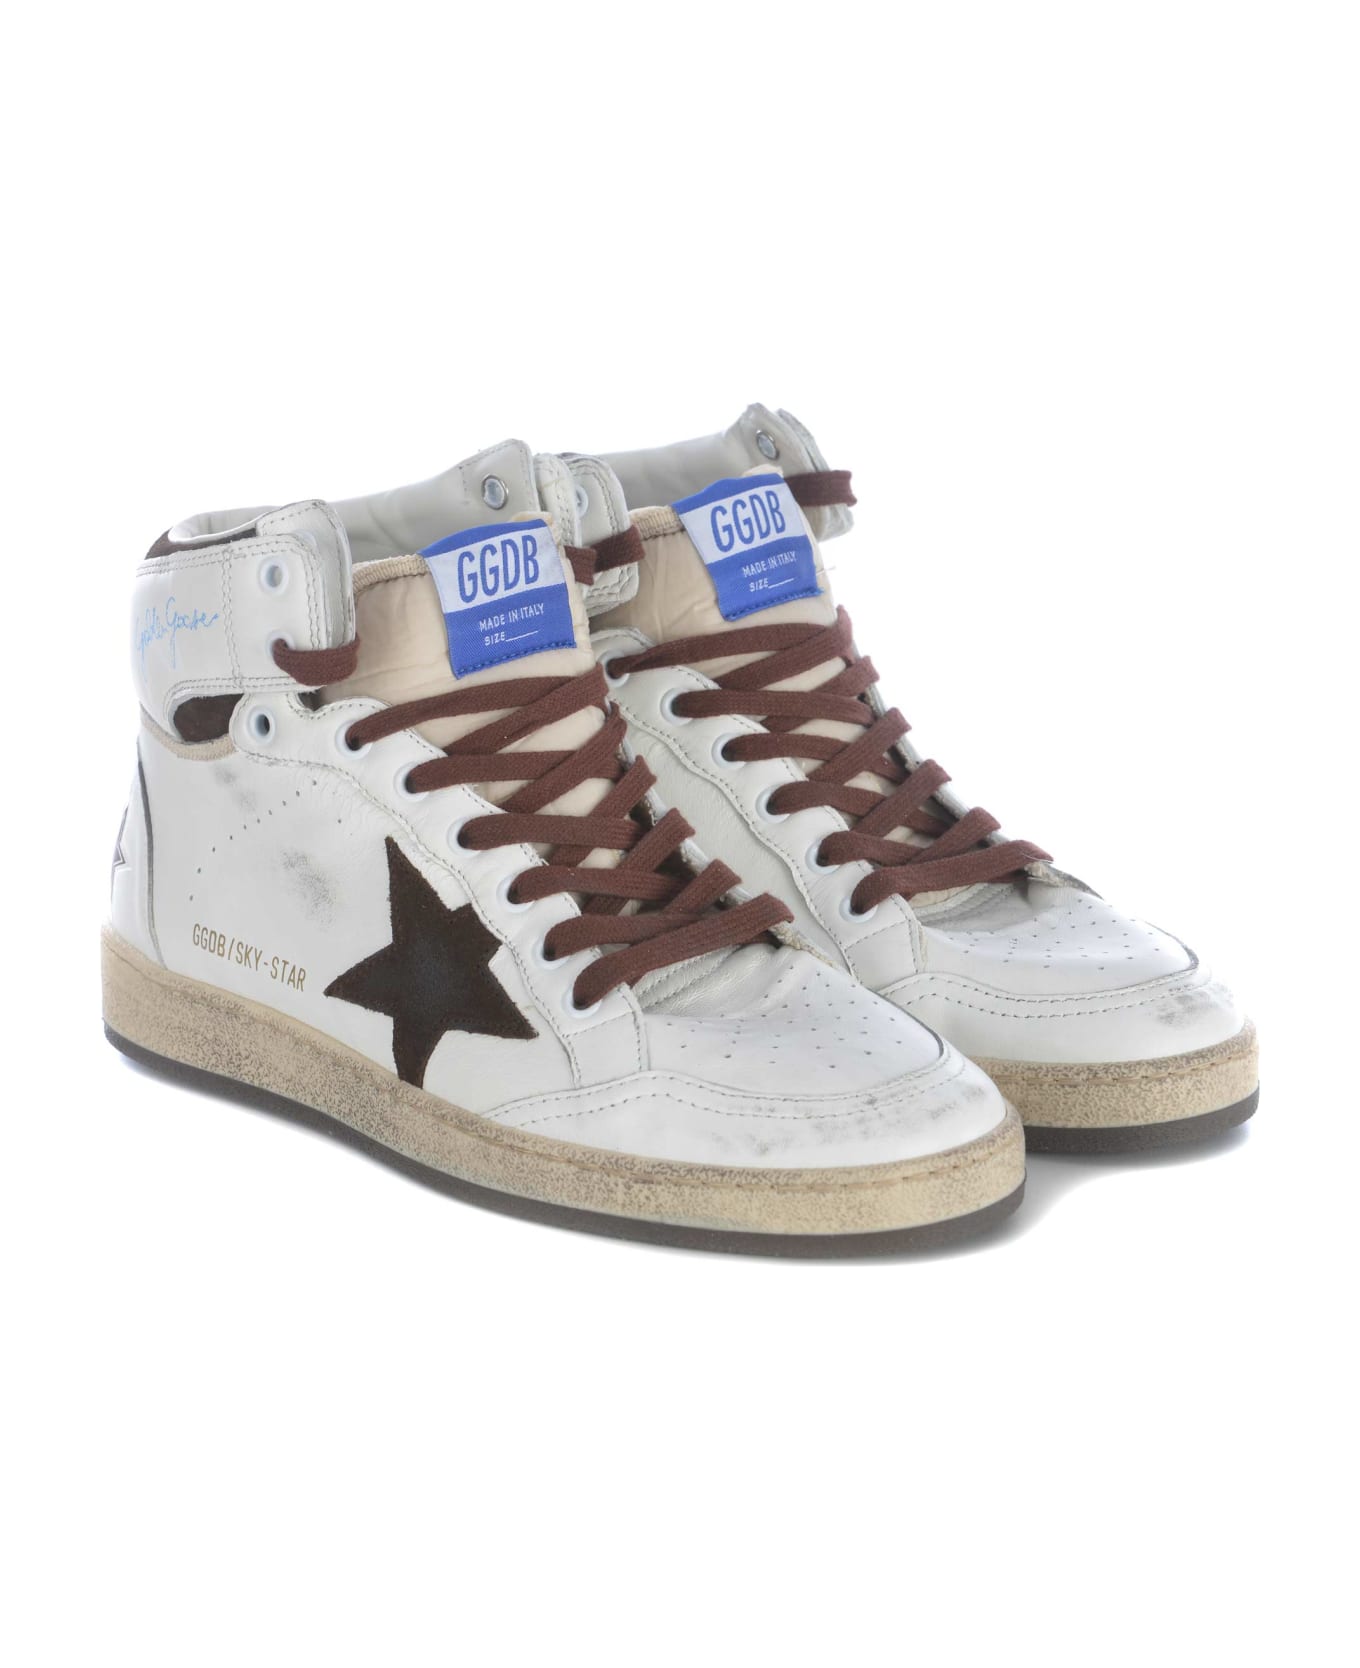 Golden Goose Sky Star Sneakers - White/Beige/Chocolate Brown スニーカー